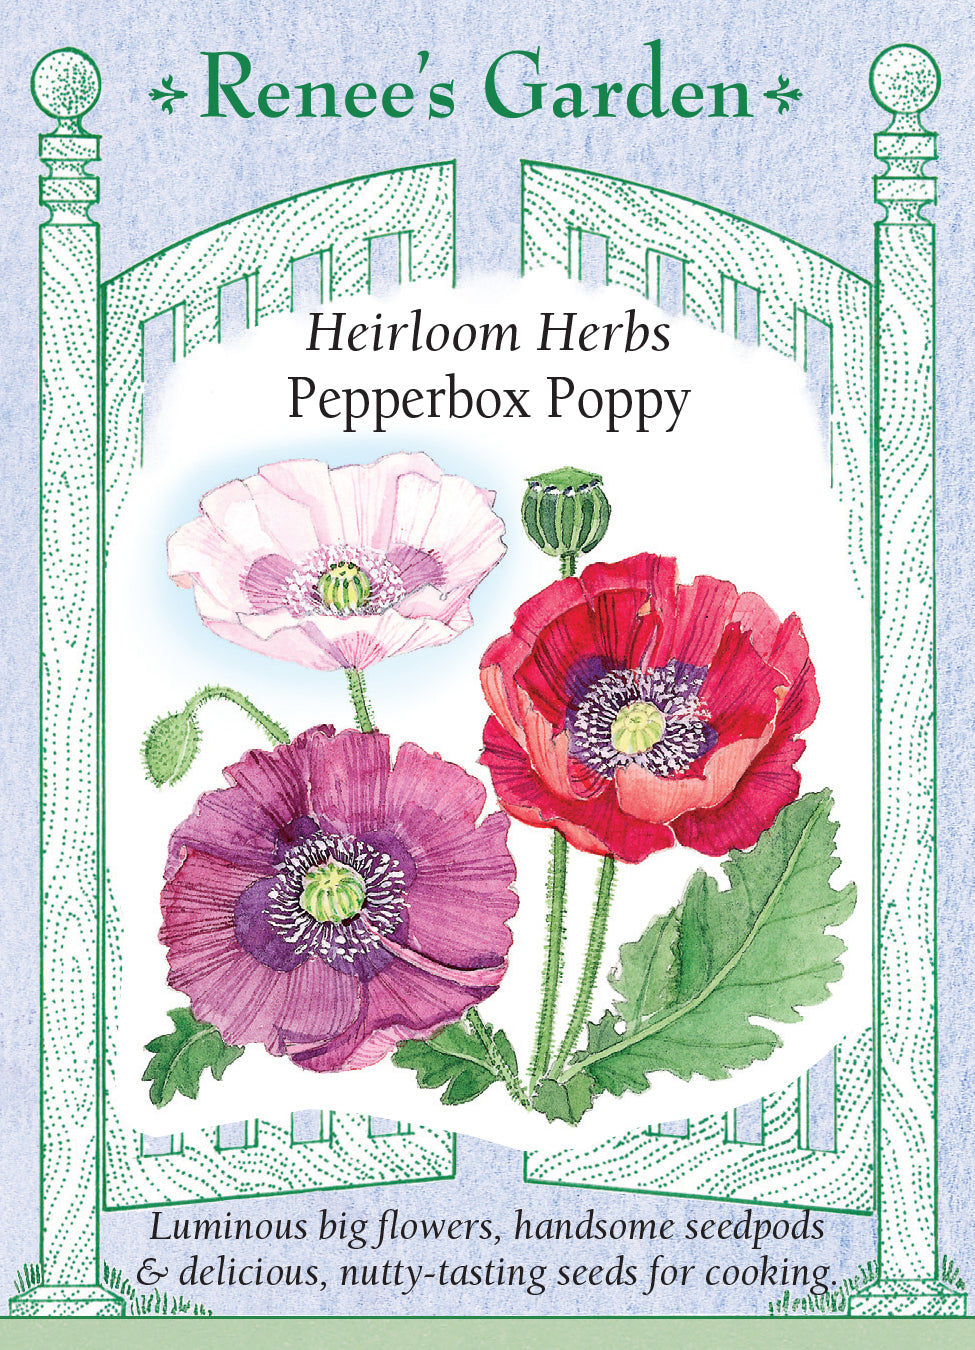 Pepperbox Poppy' Heirloom Herbs